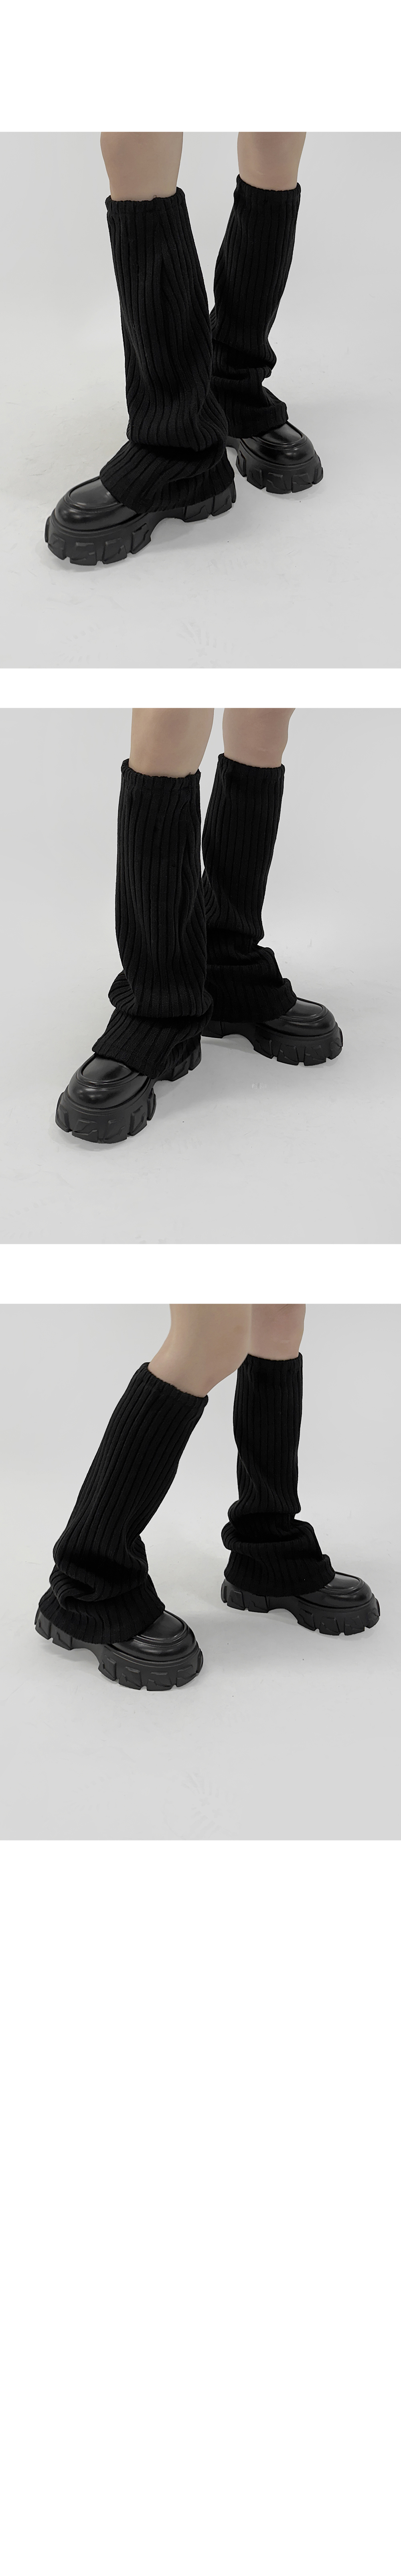 socks charcoal color image-S1L6